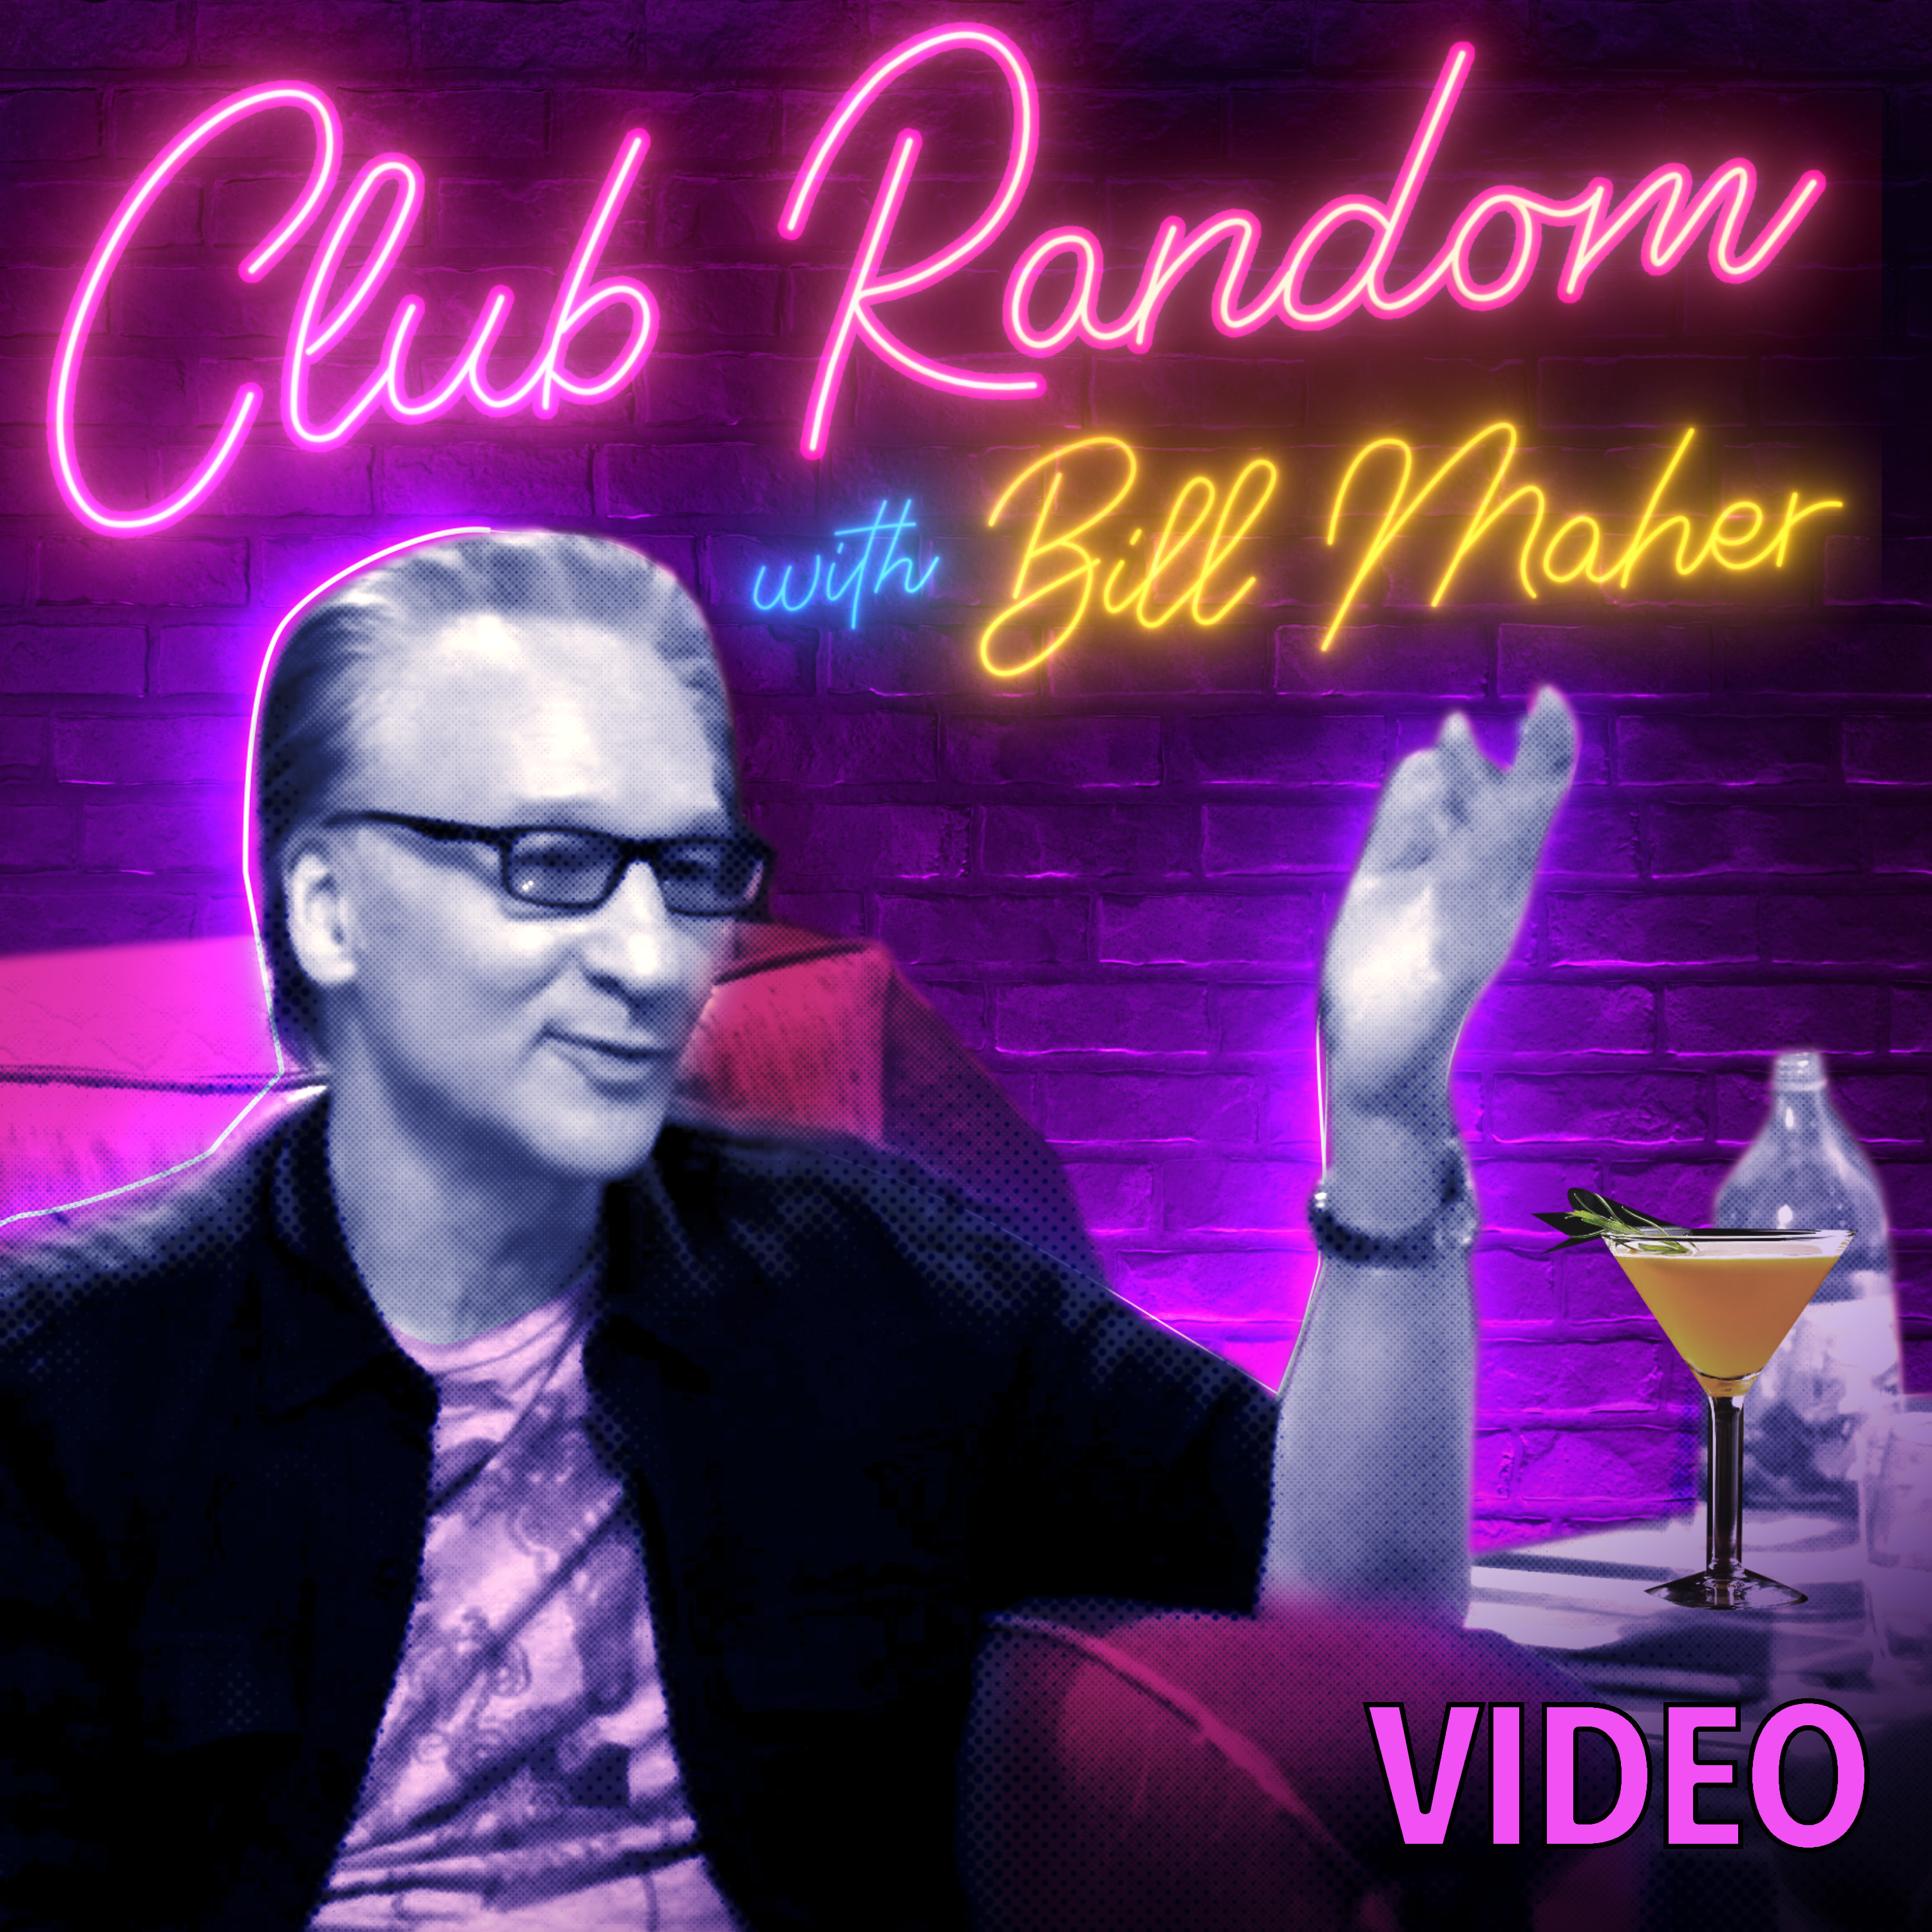 Video: Jordan Peterson | Club Random with Bill Maher